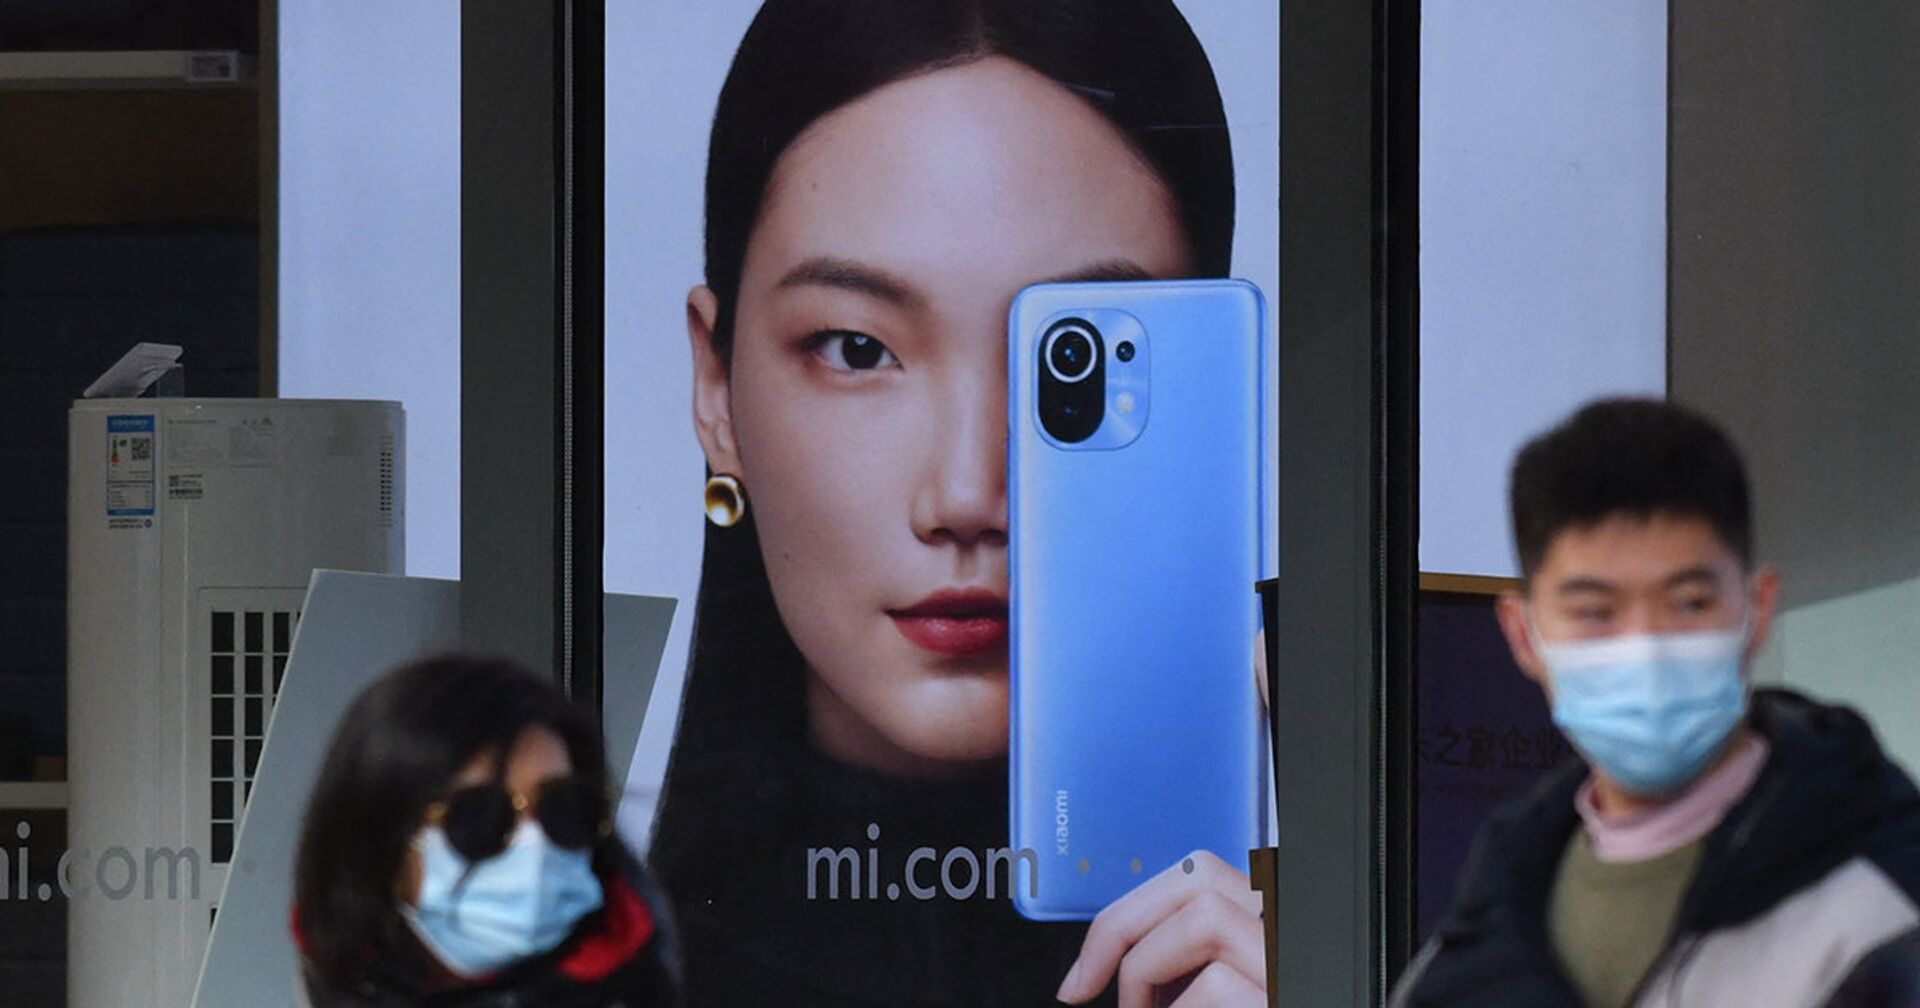 Реклама смартфона компании Xiaomi в Пекине - ИноСМИ, 1920, 05.03.2021